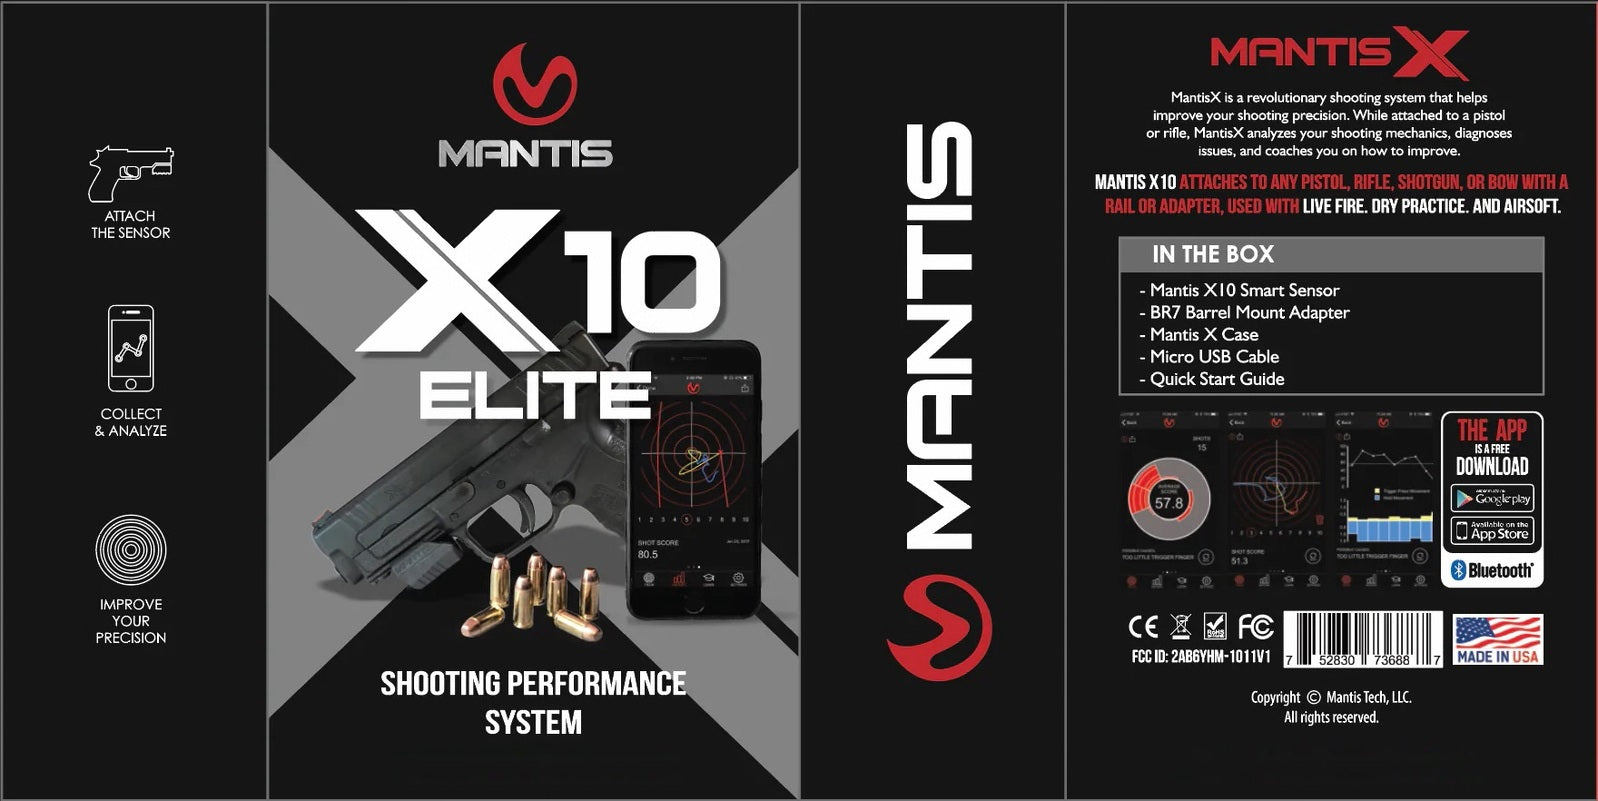 Mantis X10 Elite Shooting Performance System – Detectors Down 